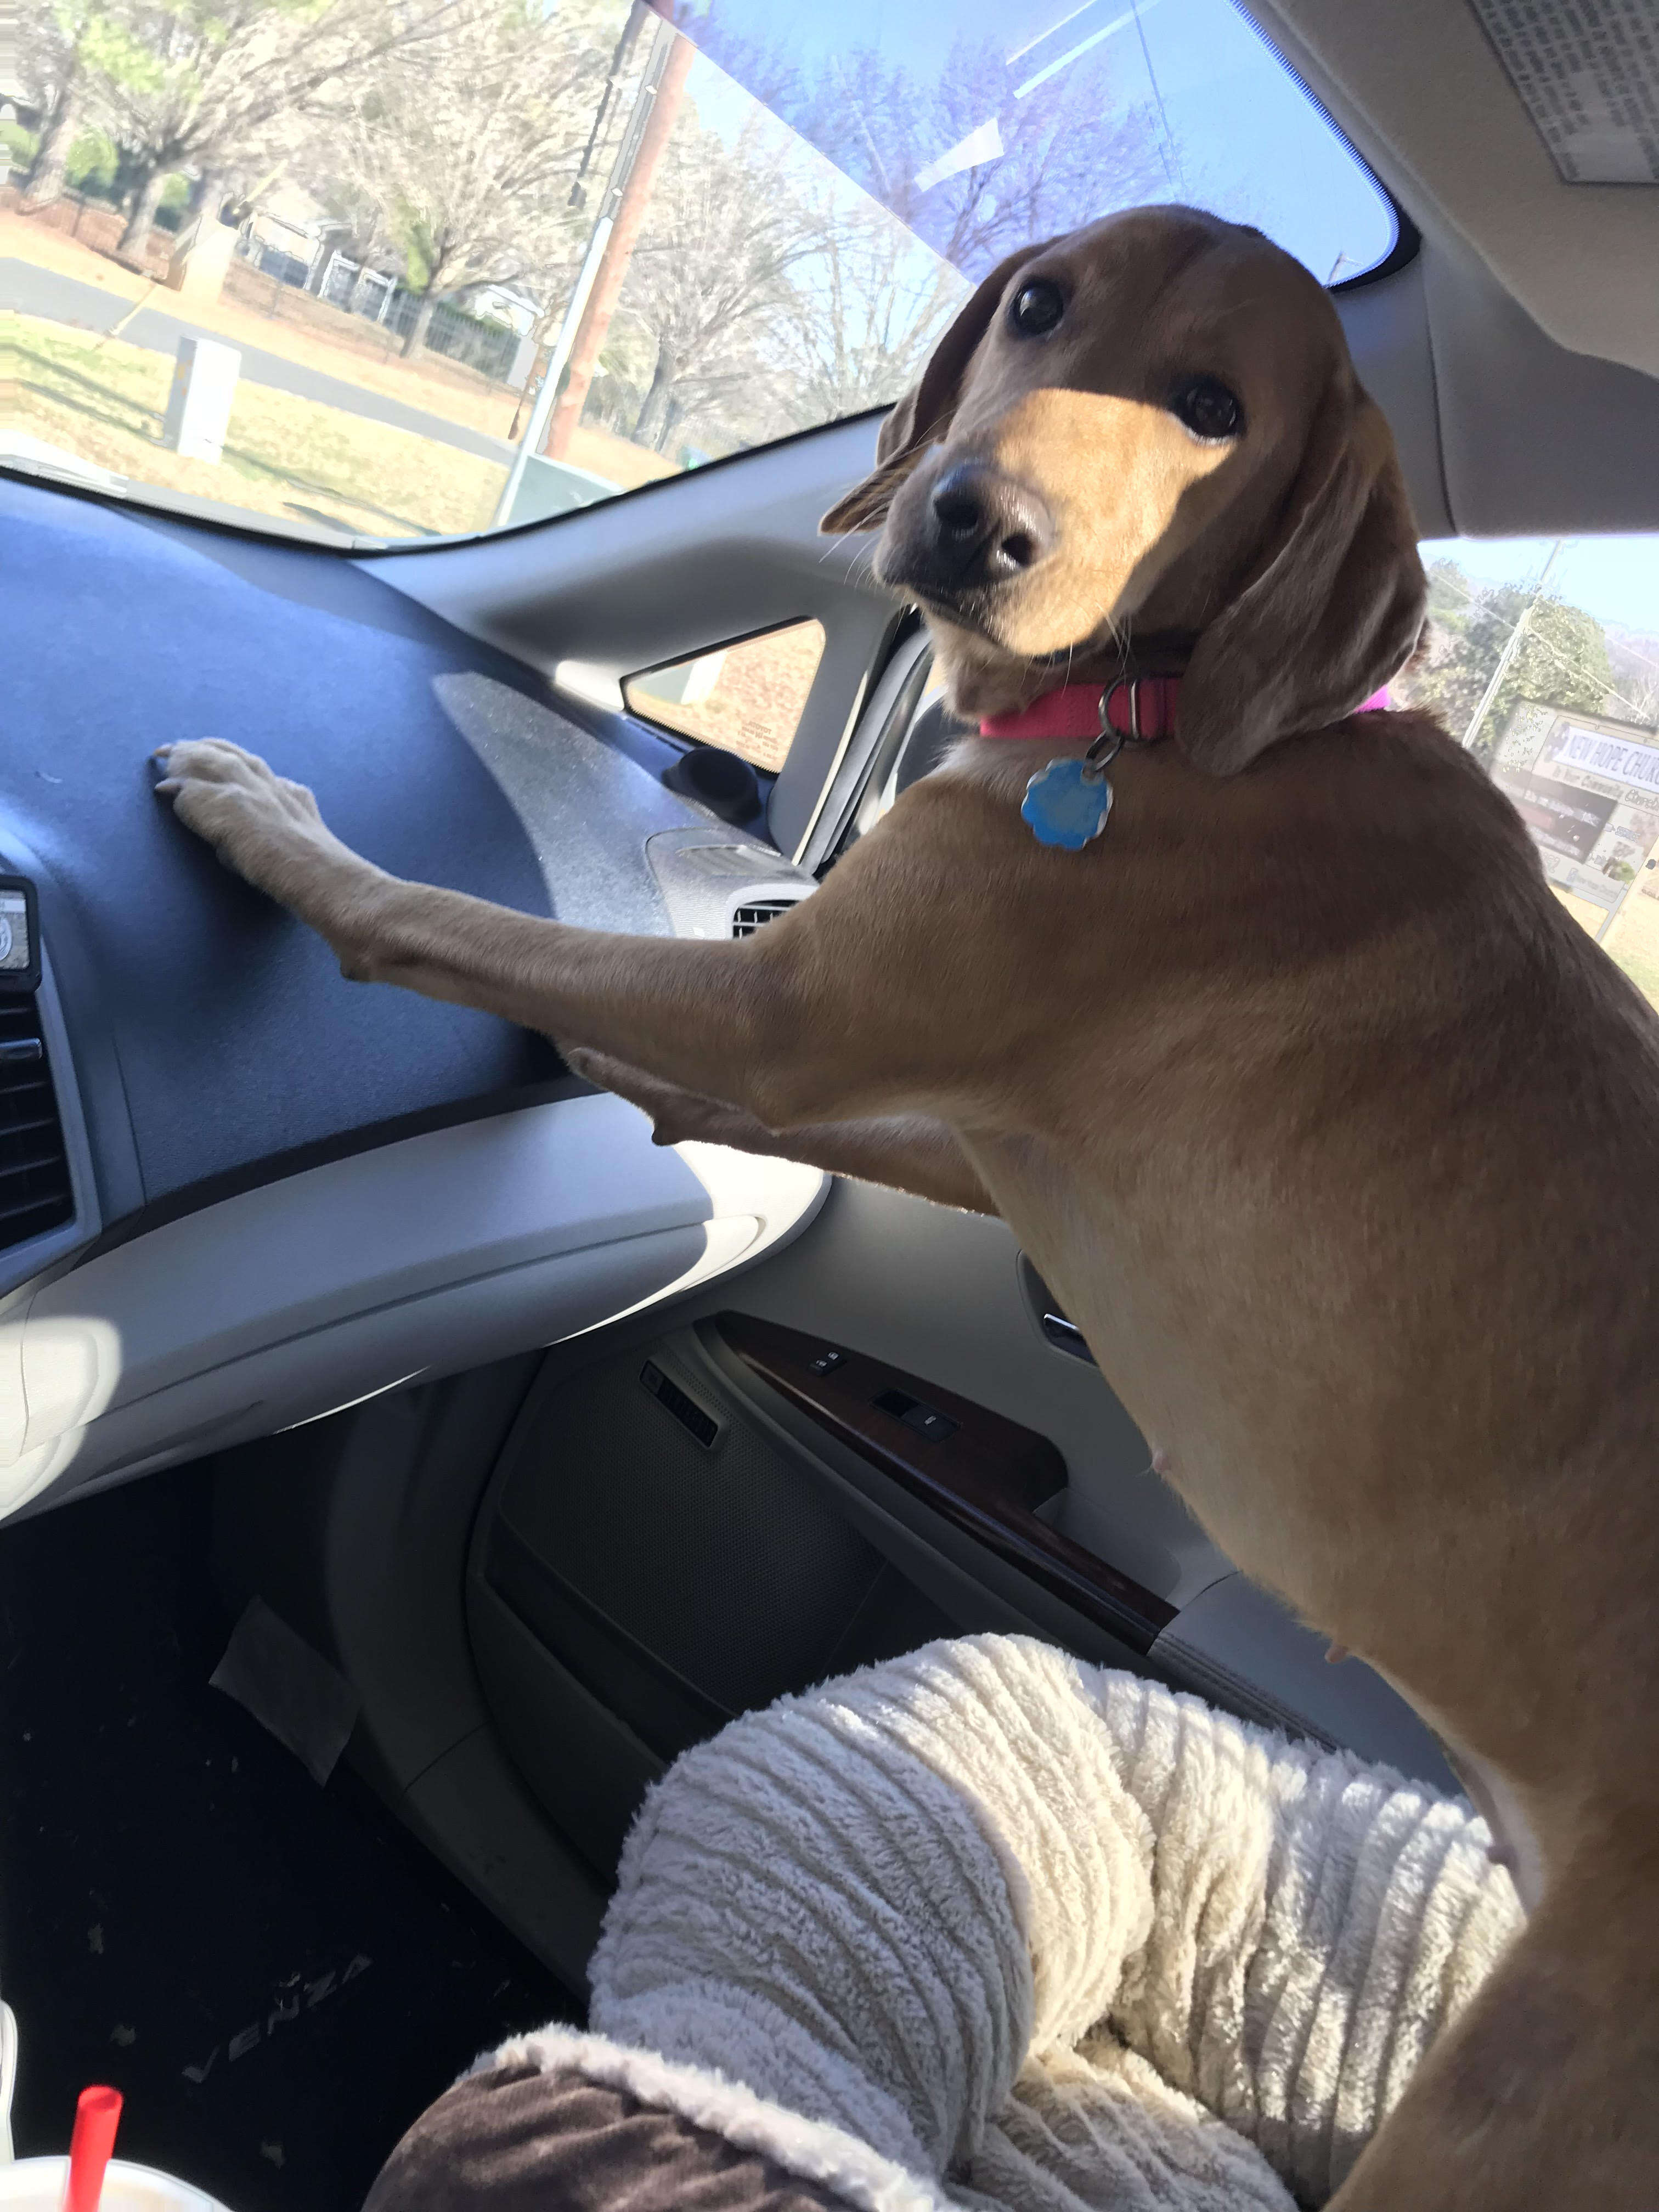 Dog leaning on dash board in car